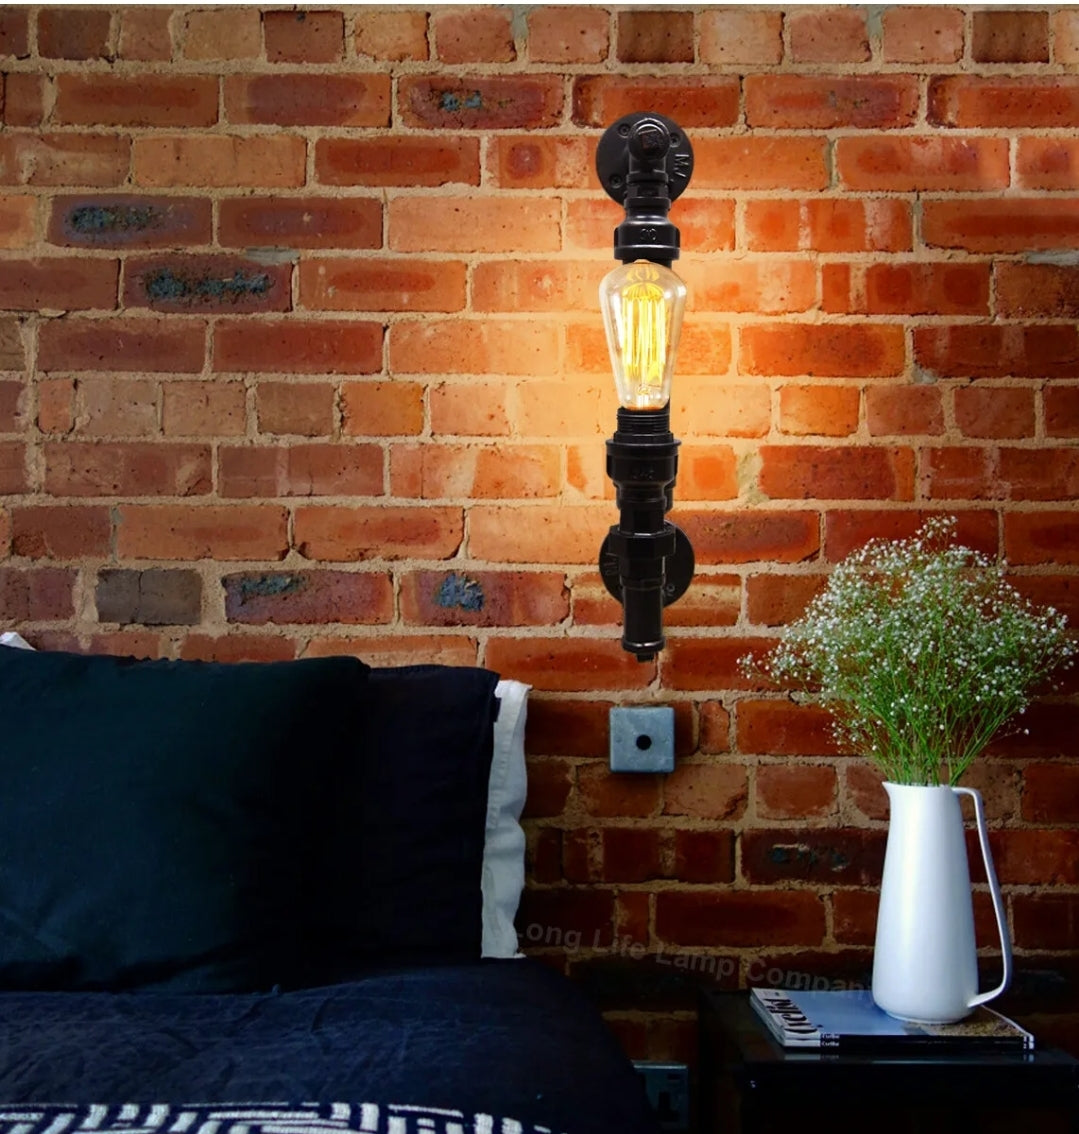 Rustic steampunk wall light